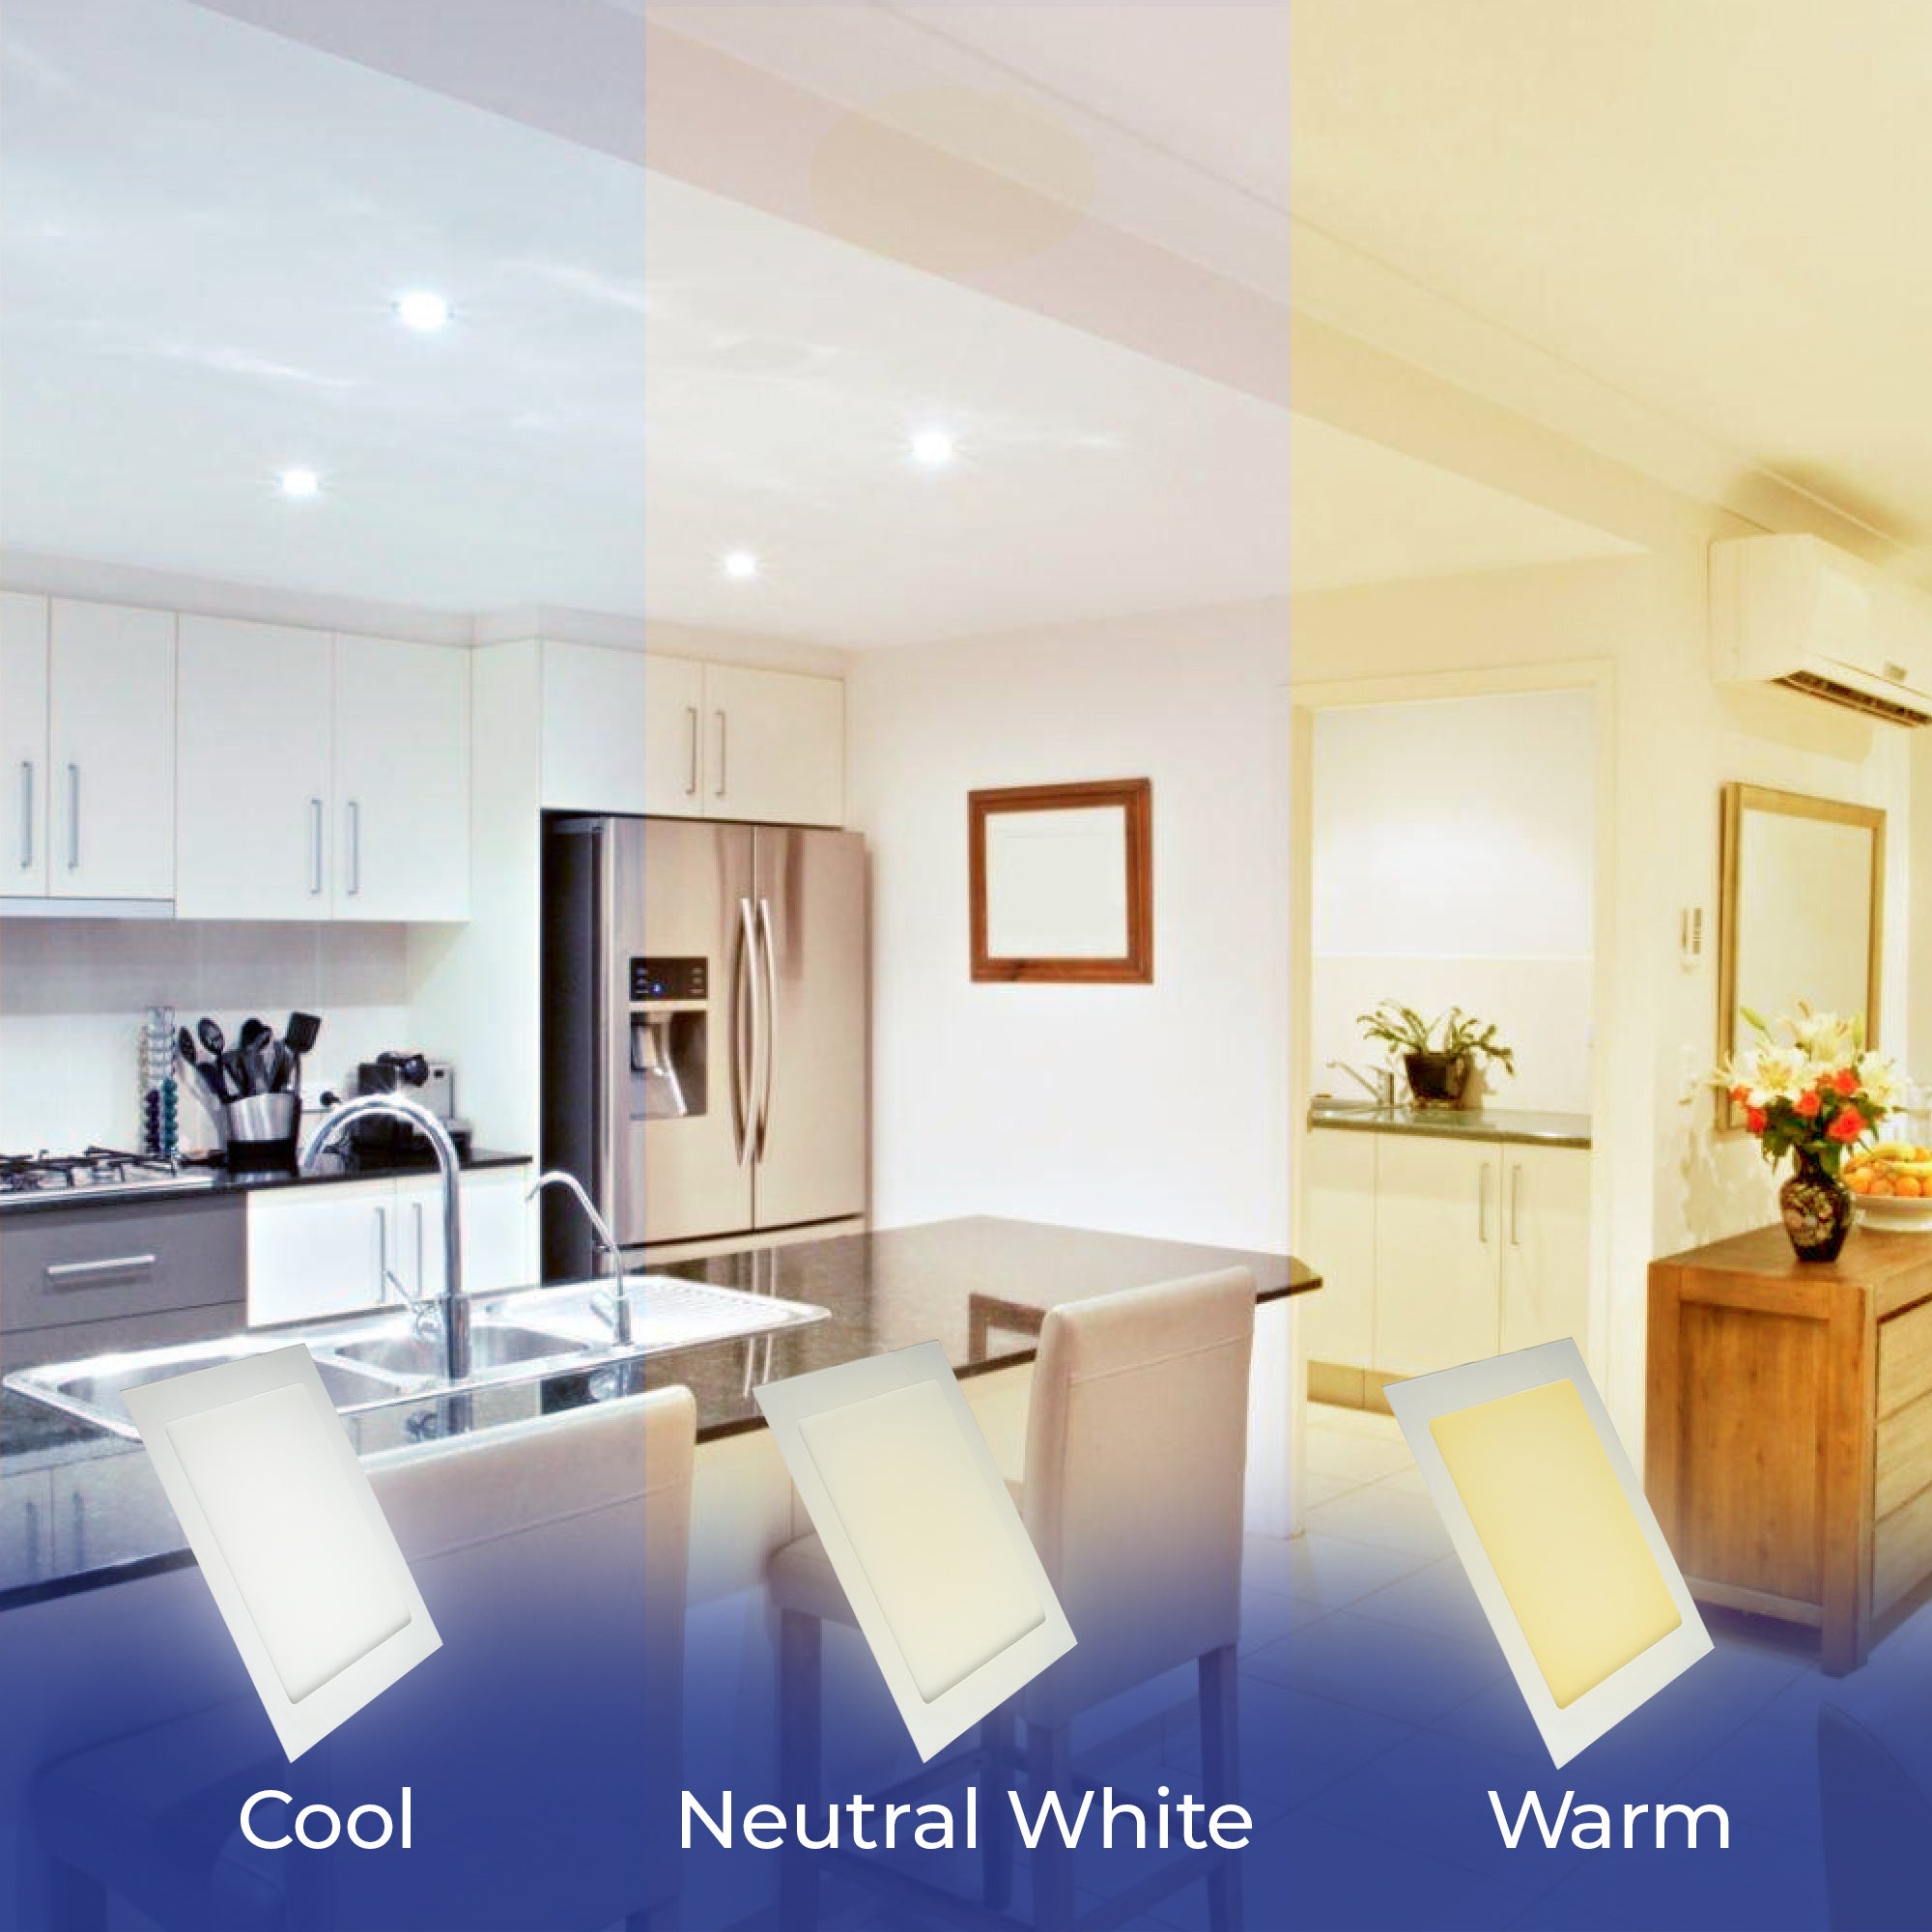 Cool warm and neutral lighting comparison of Eligo square led panel light